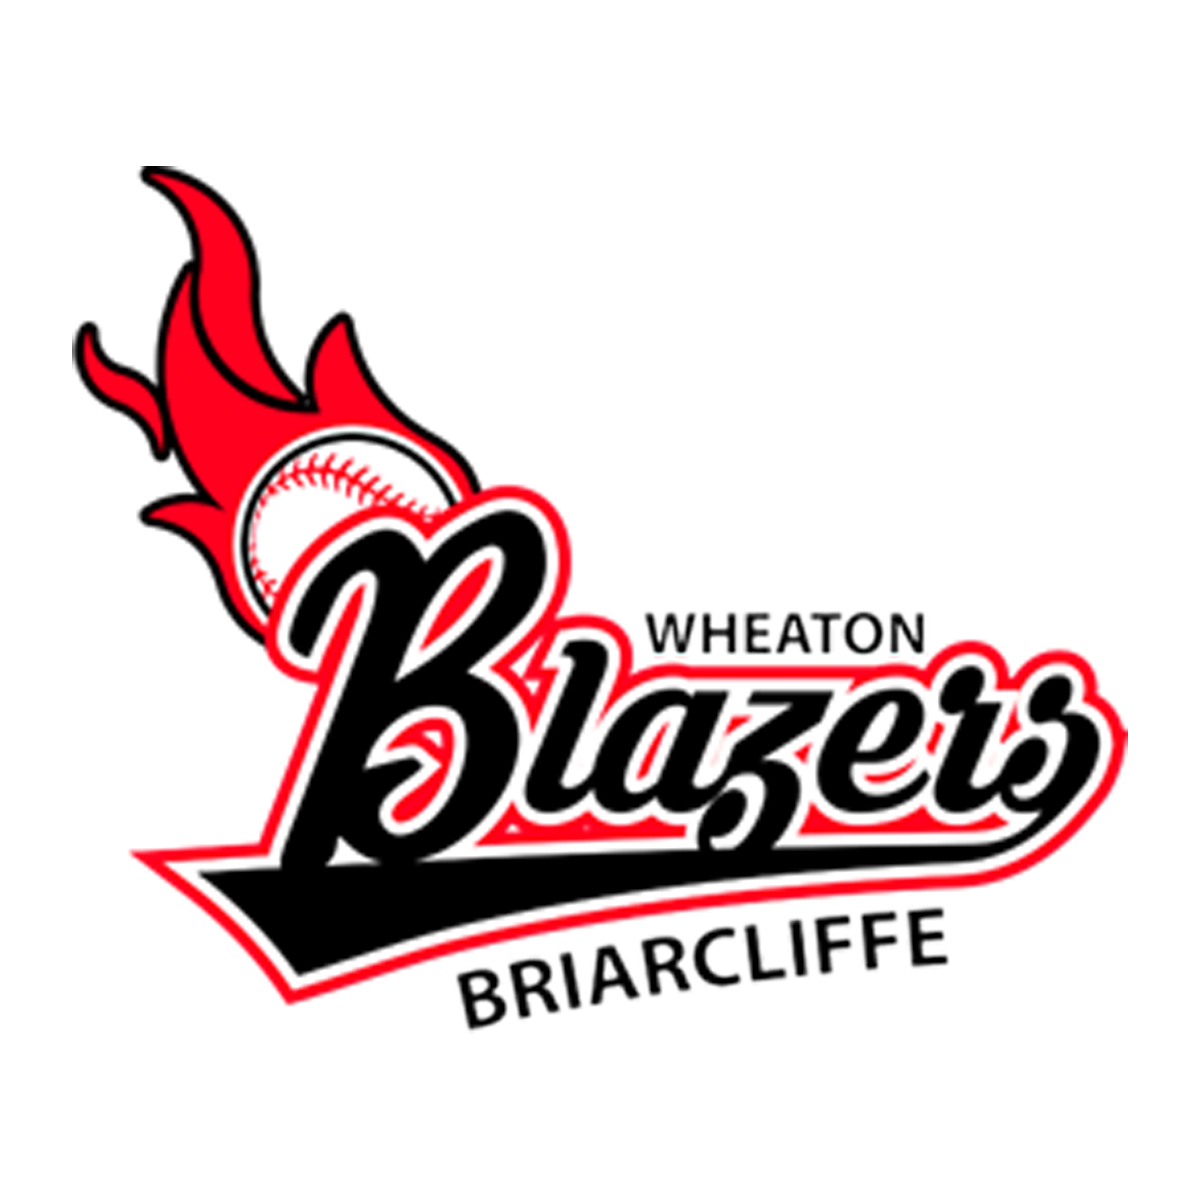 Wheaton Briarcliffe Blazers Baseball Team Store